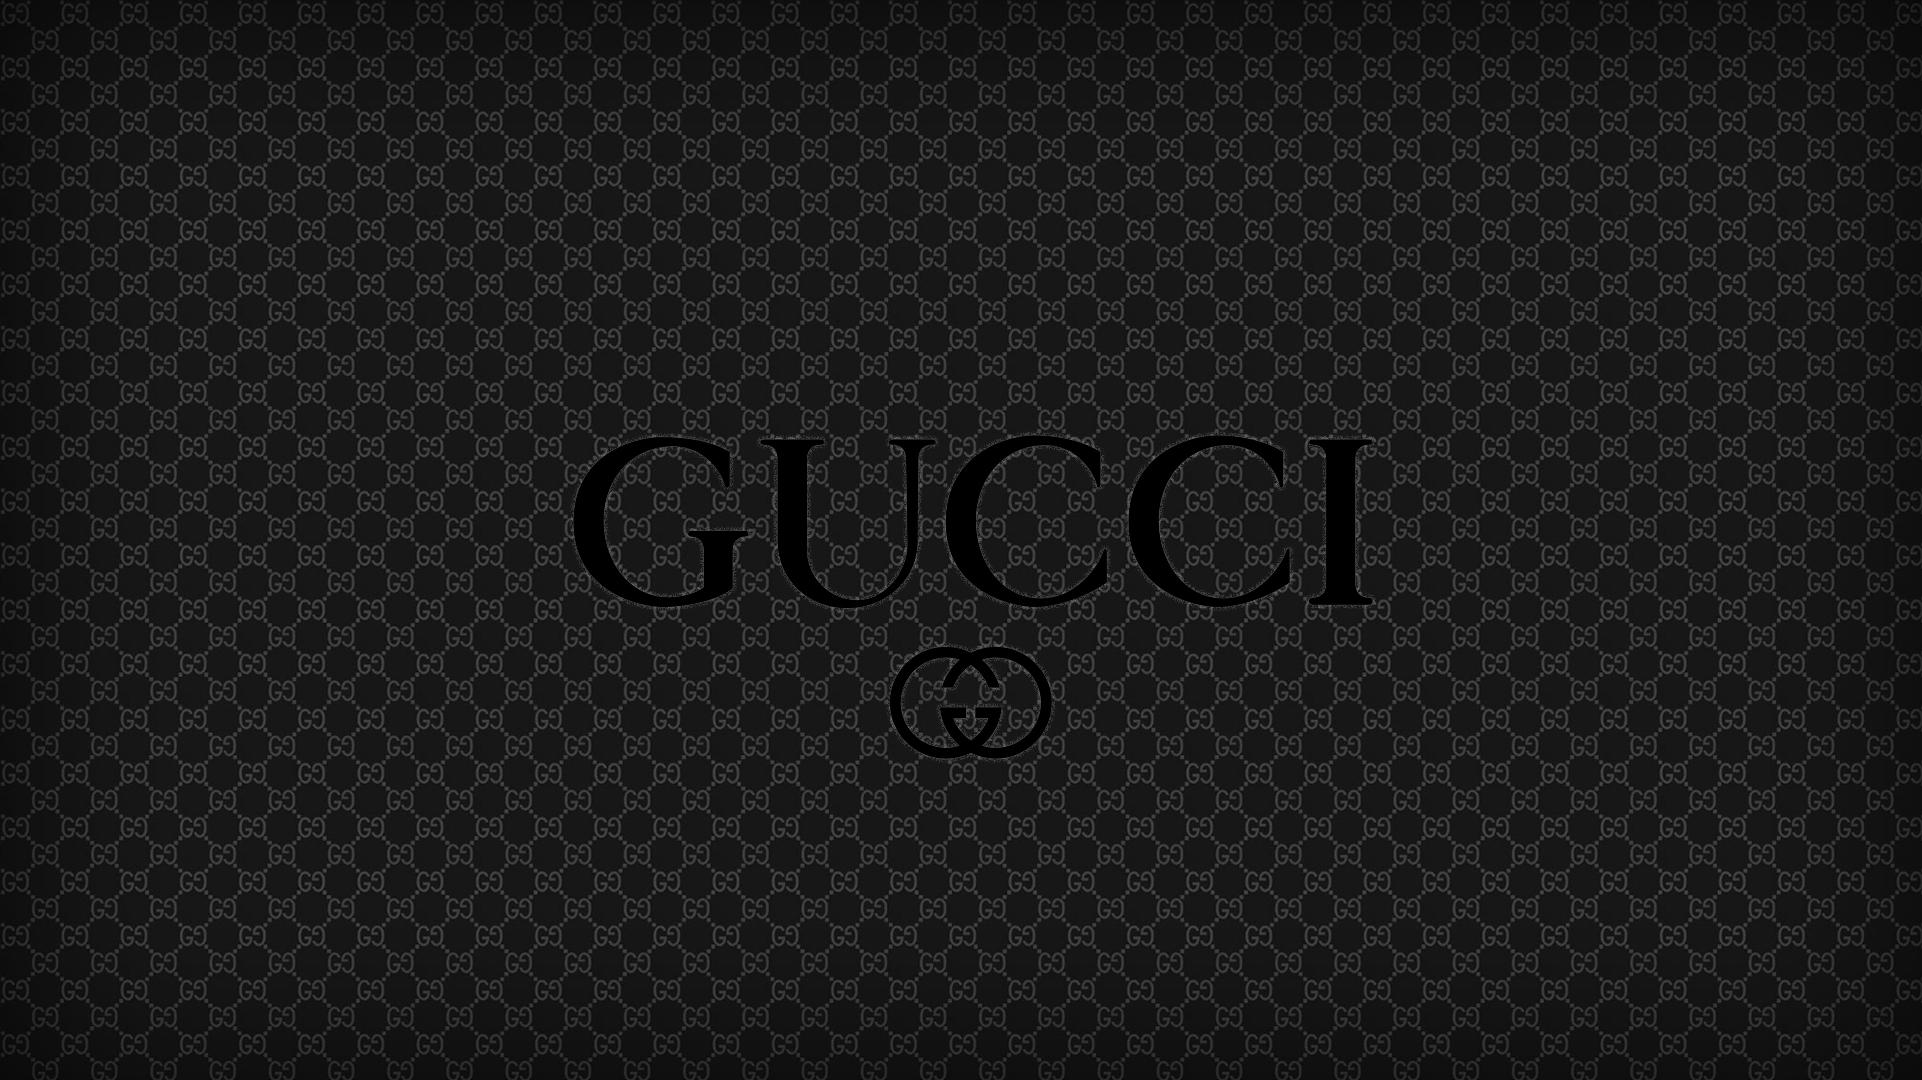 Gucci Wallpaper 4k For Laptop - Wallpaperforu